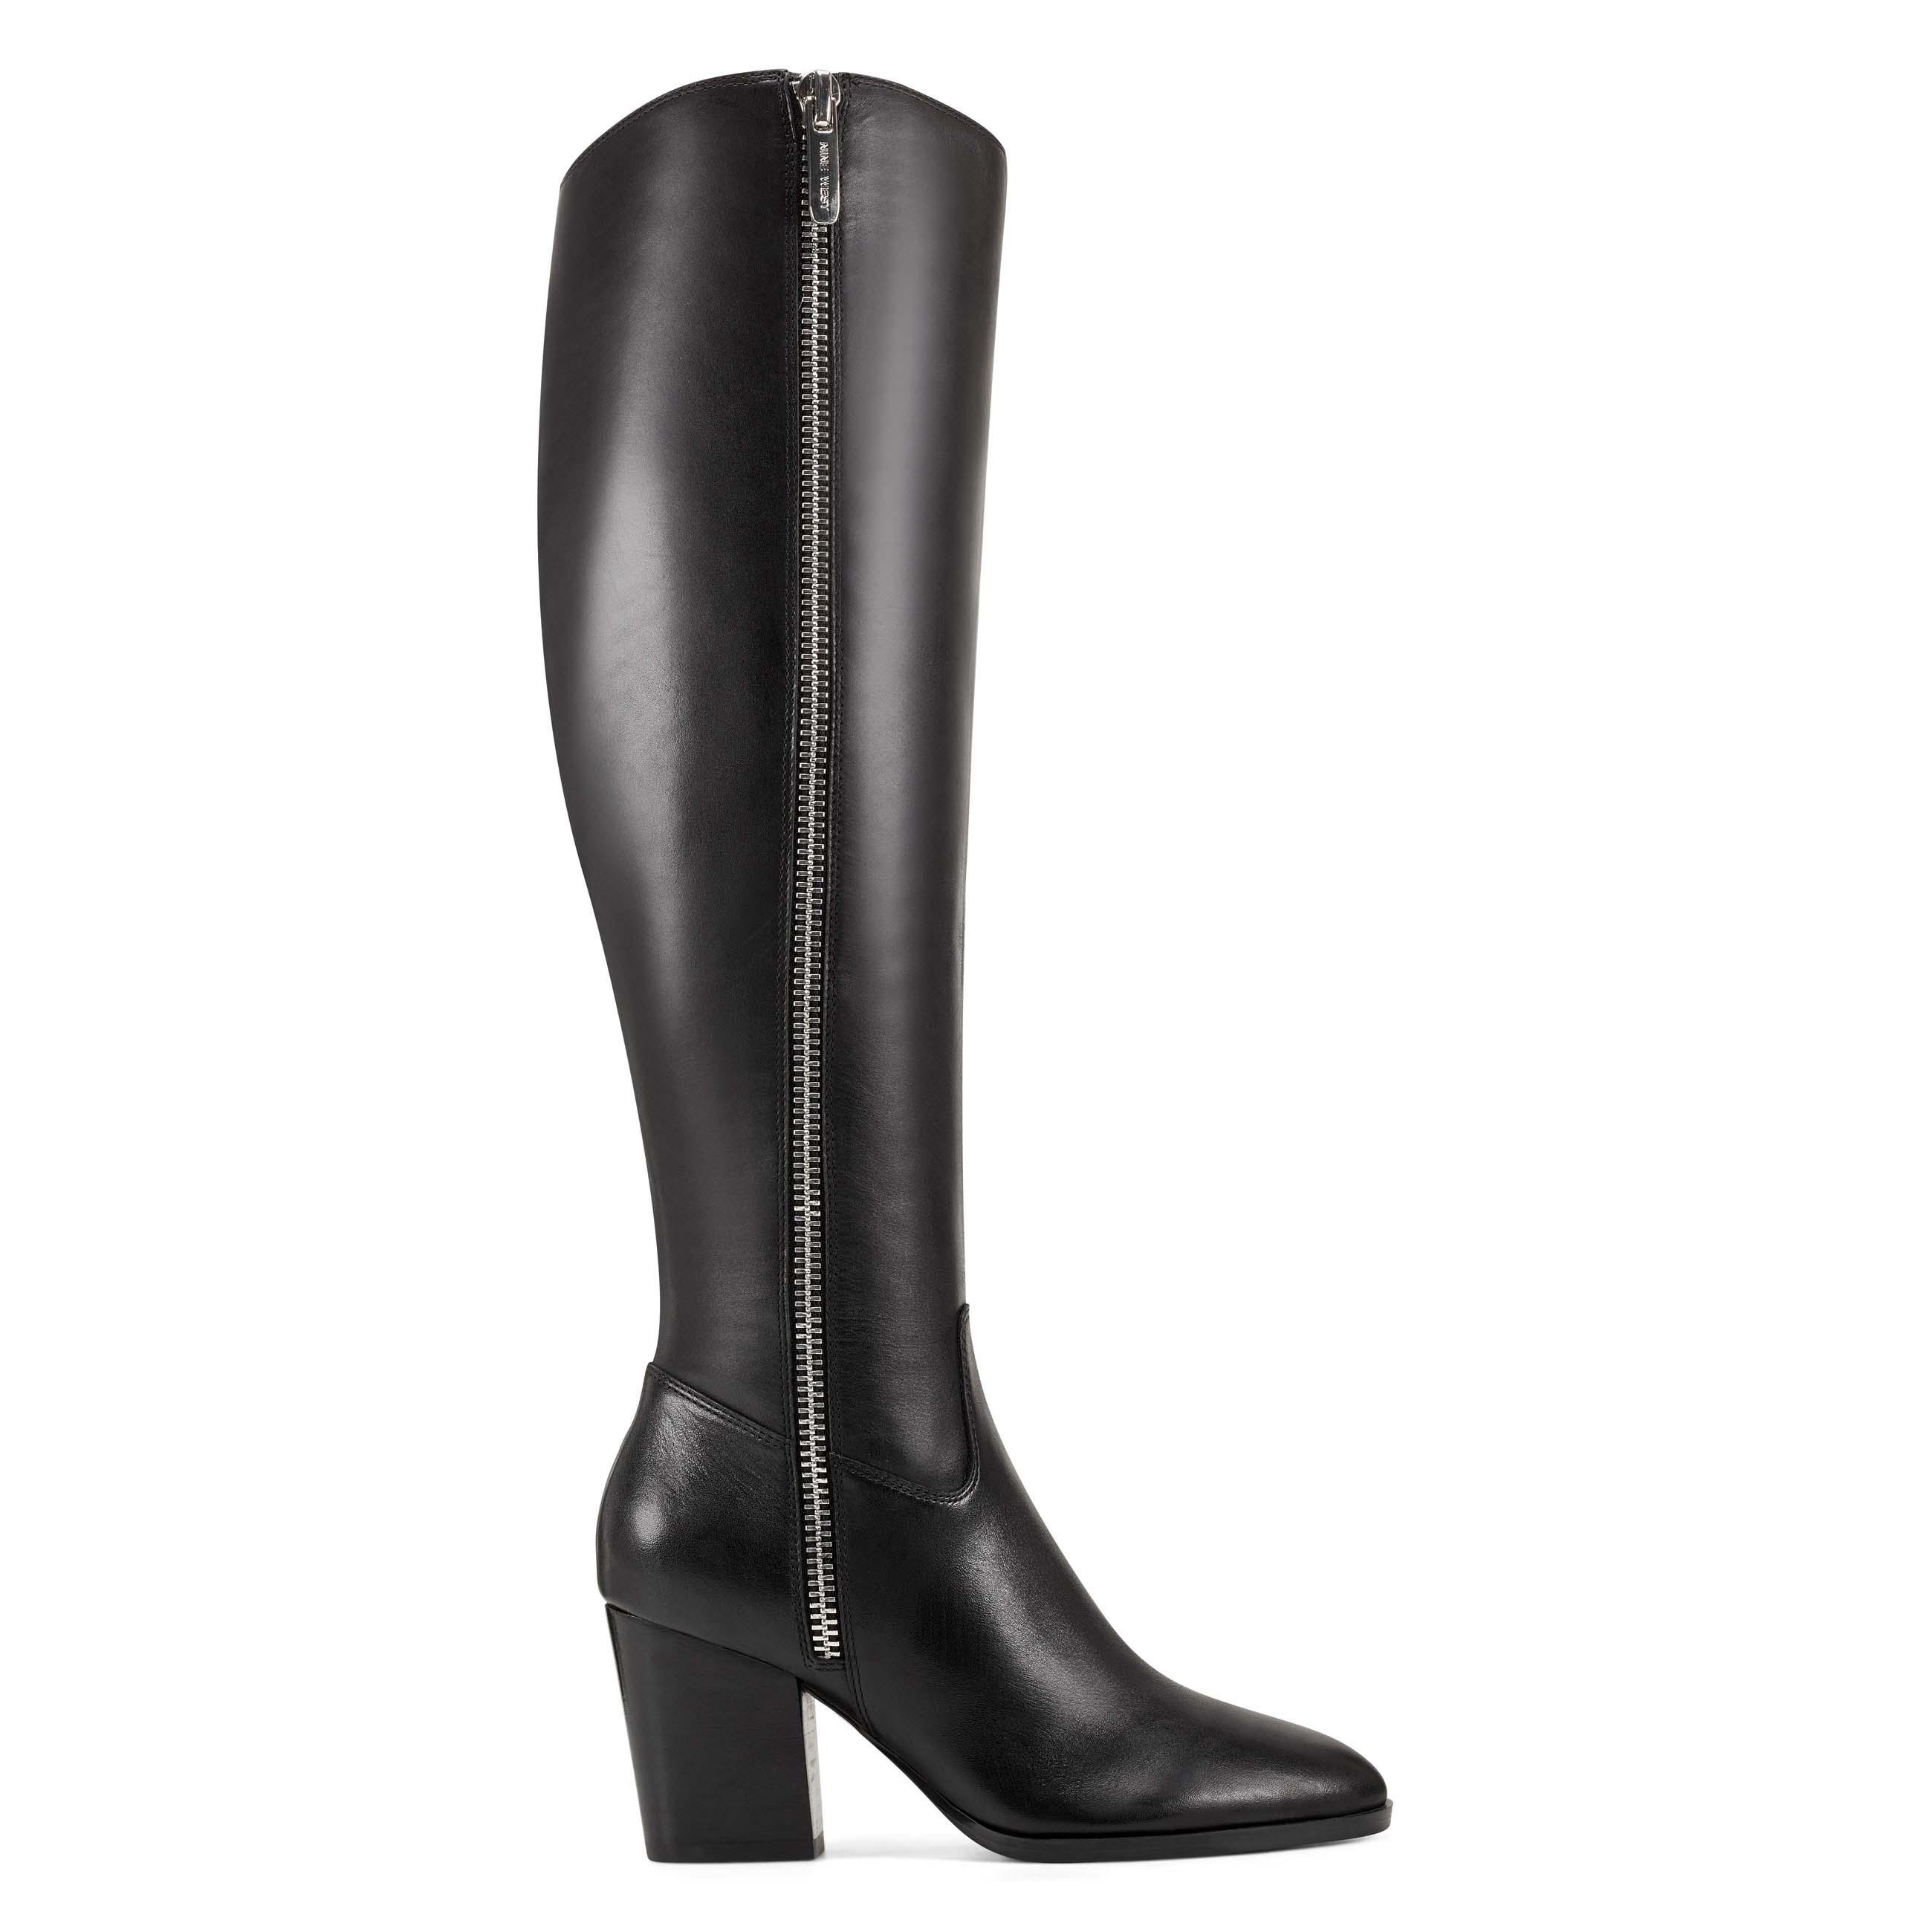 Nine West Natty Dress Boot in Black Leather (Black) - Lyst